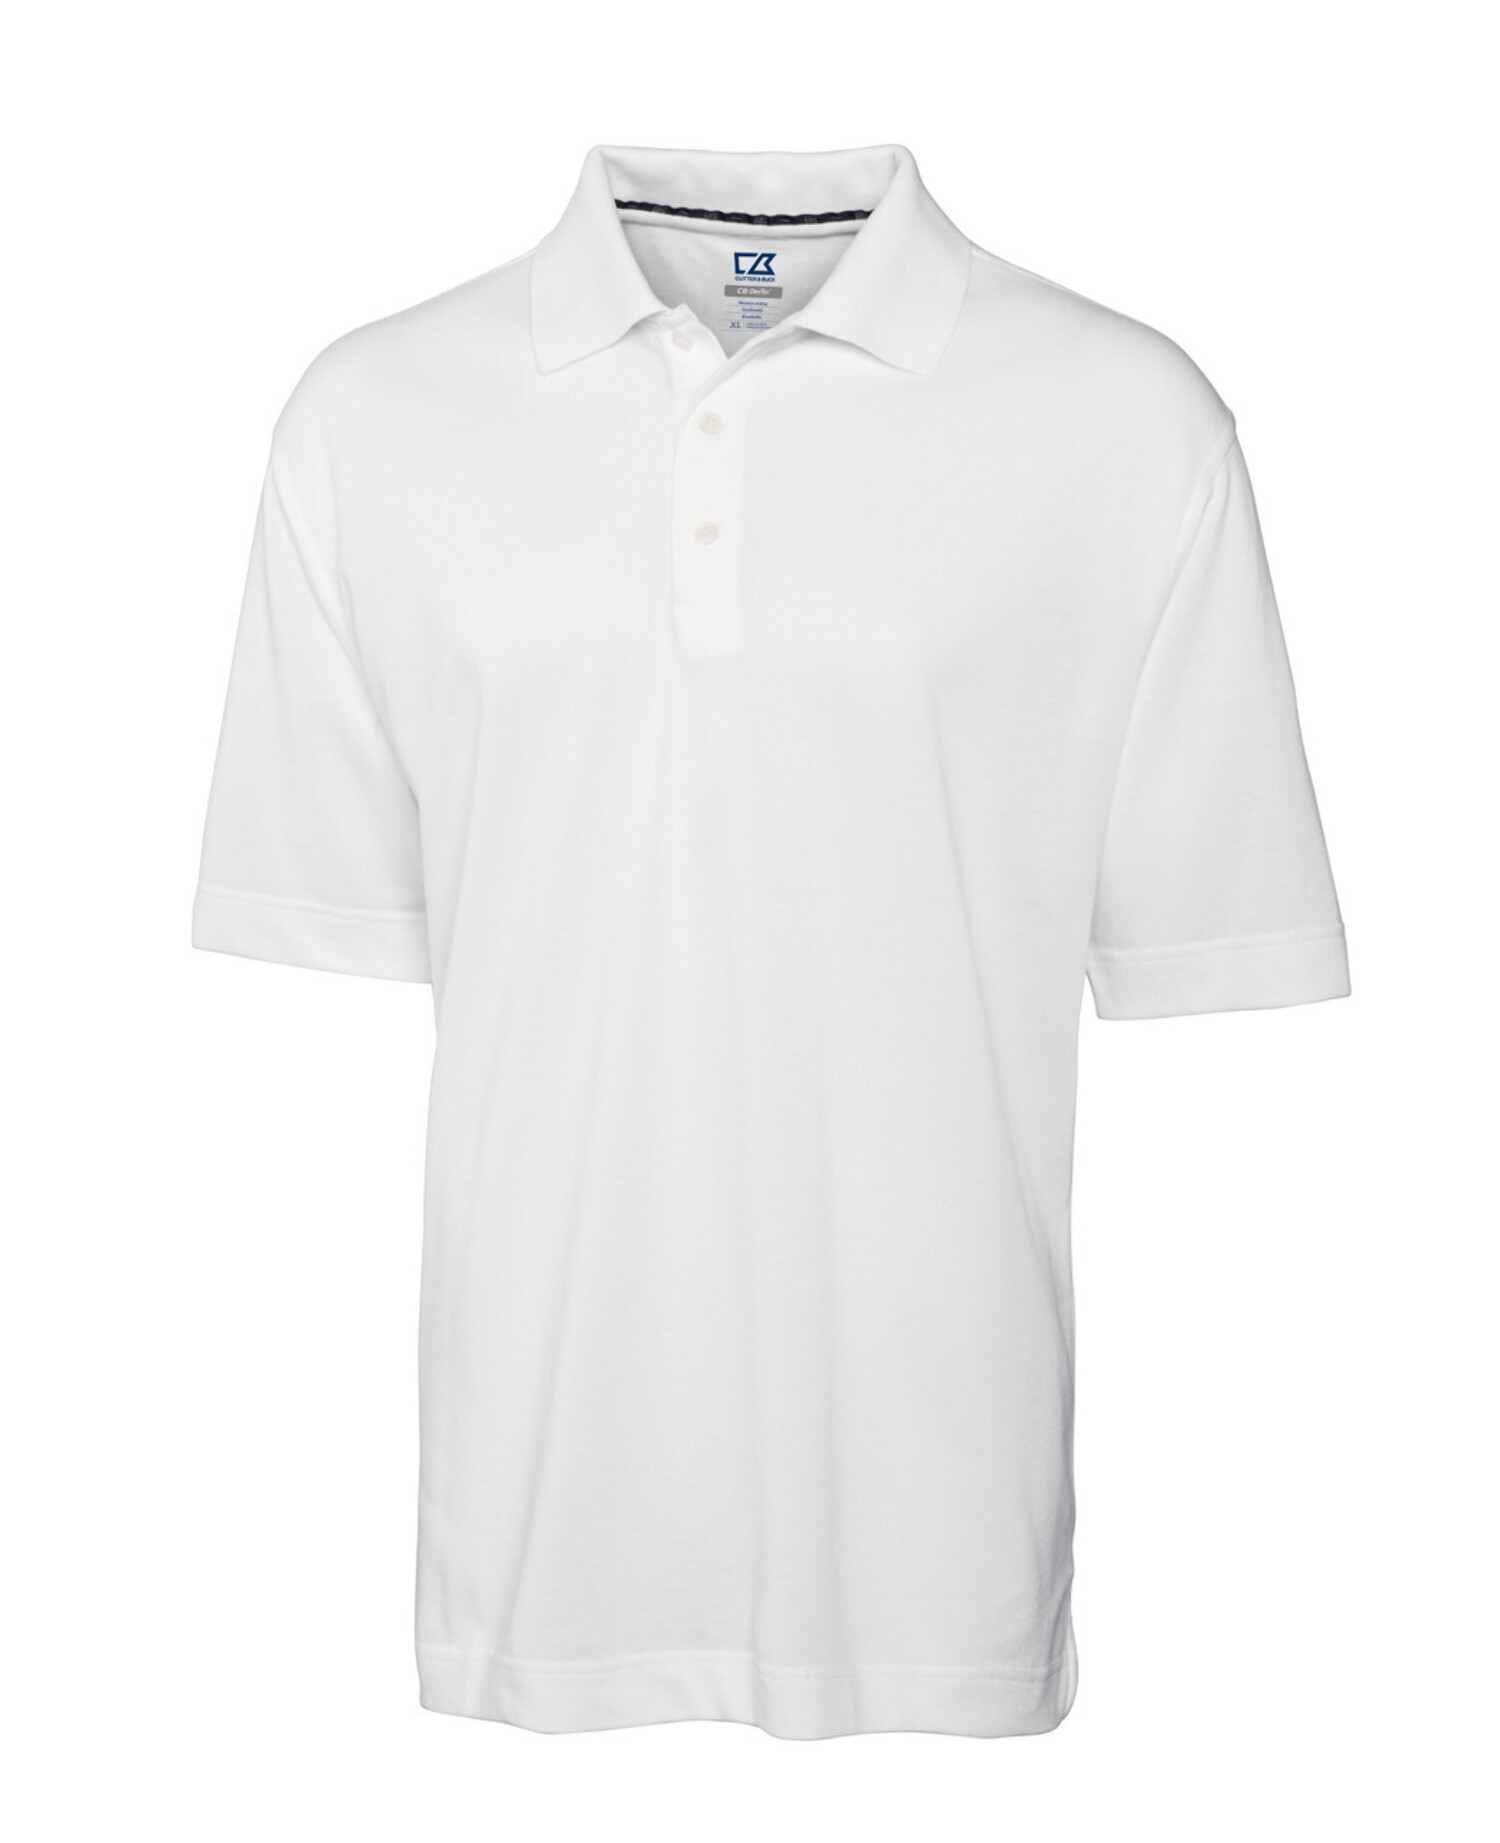 Cutter & Buck Men's Classic Three Button Polo Shirt - image 4 of 9